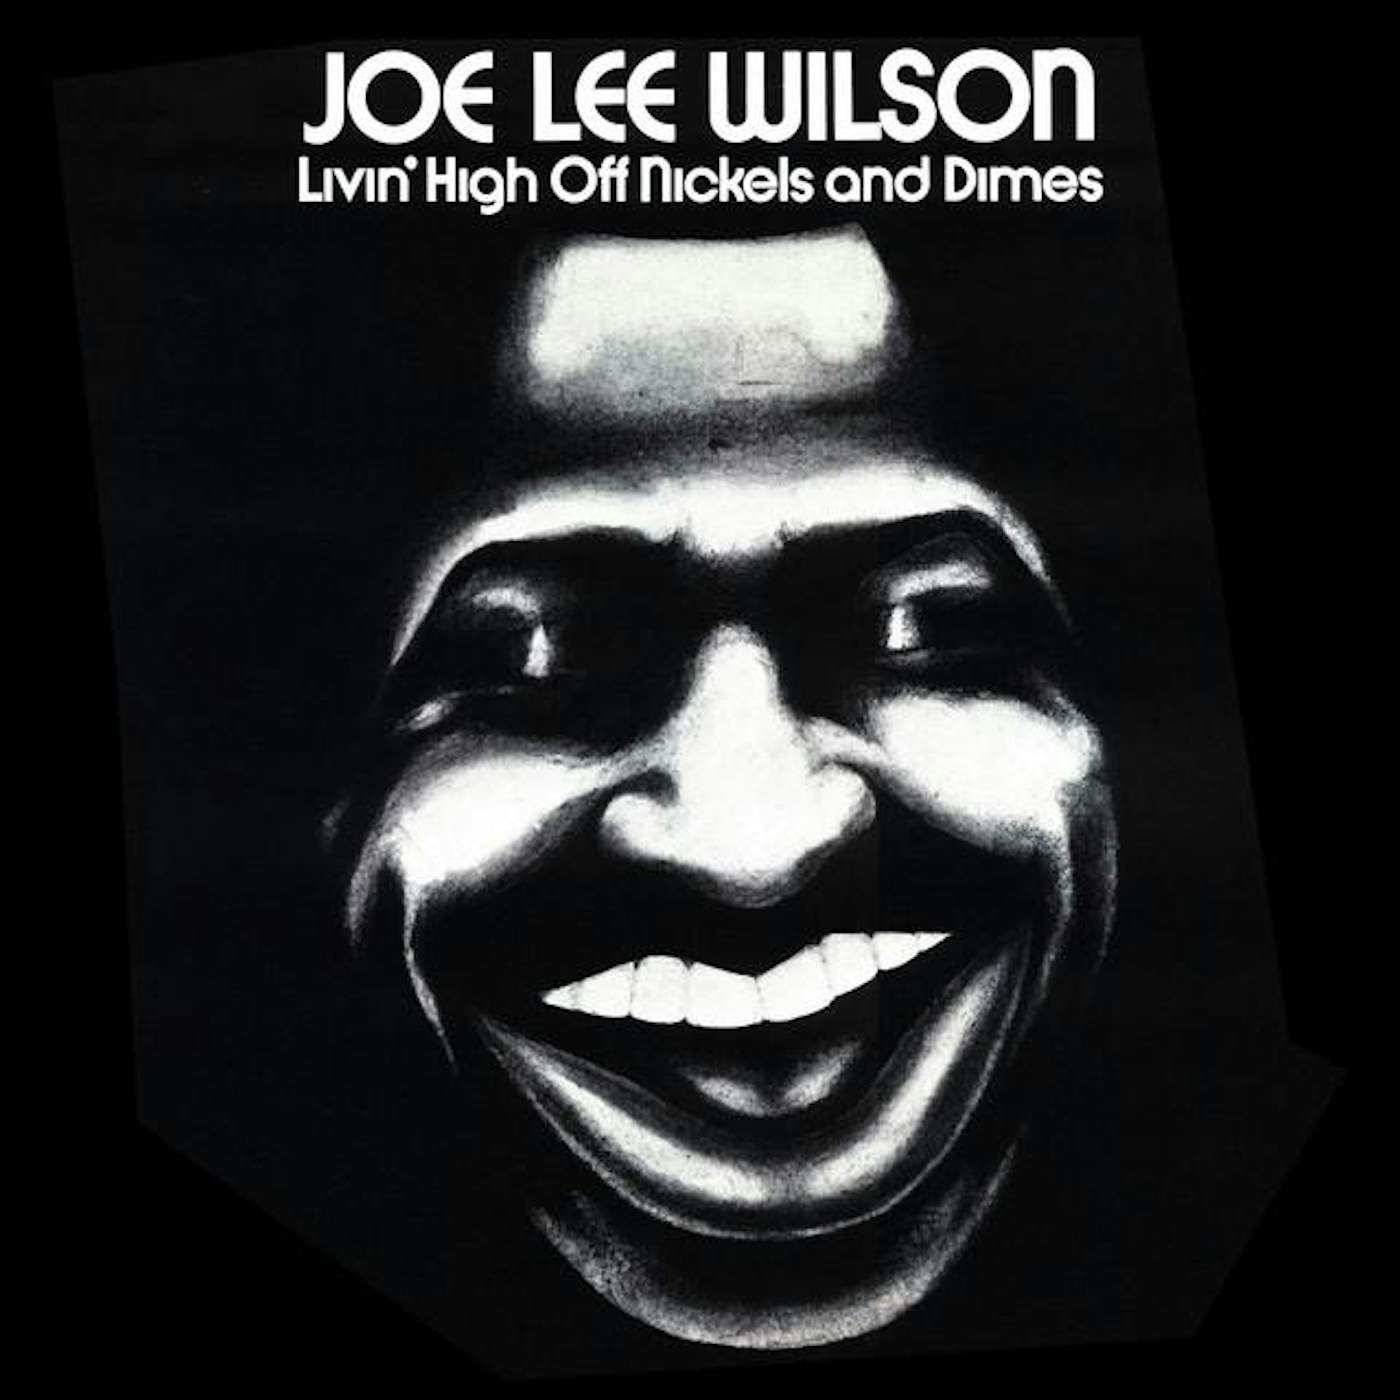 Joe Lee Wilson